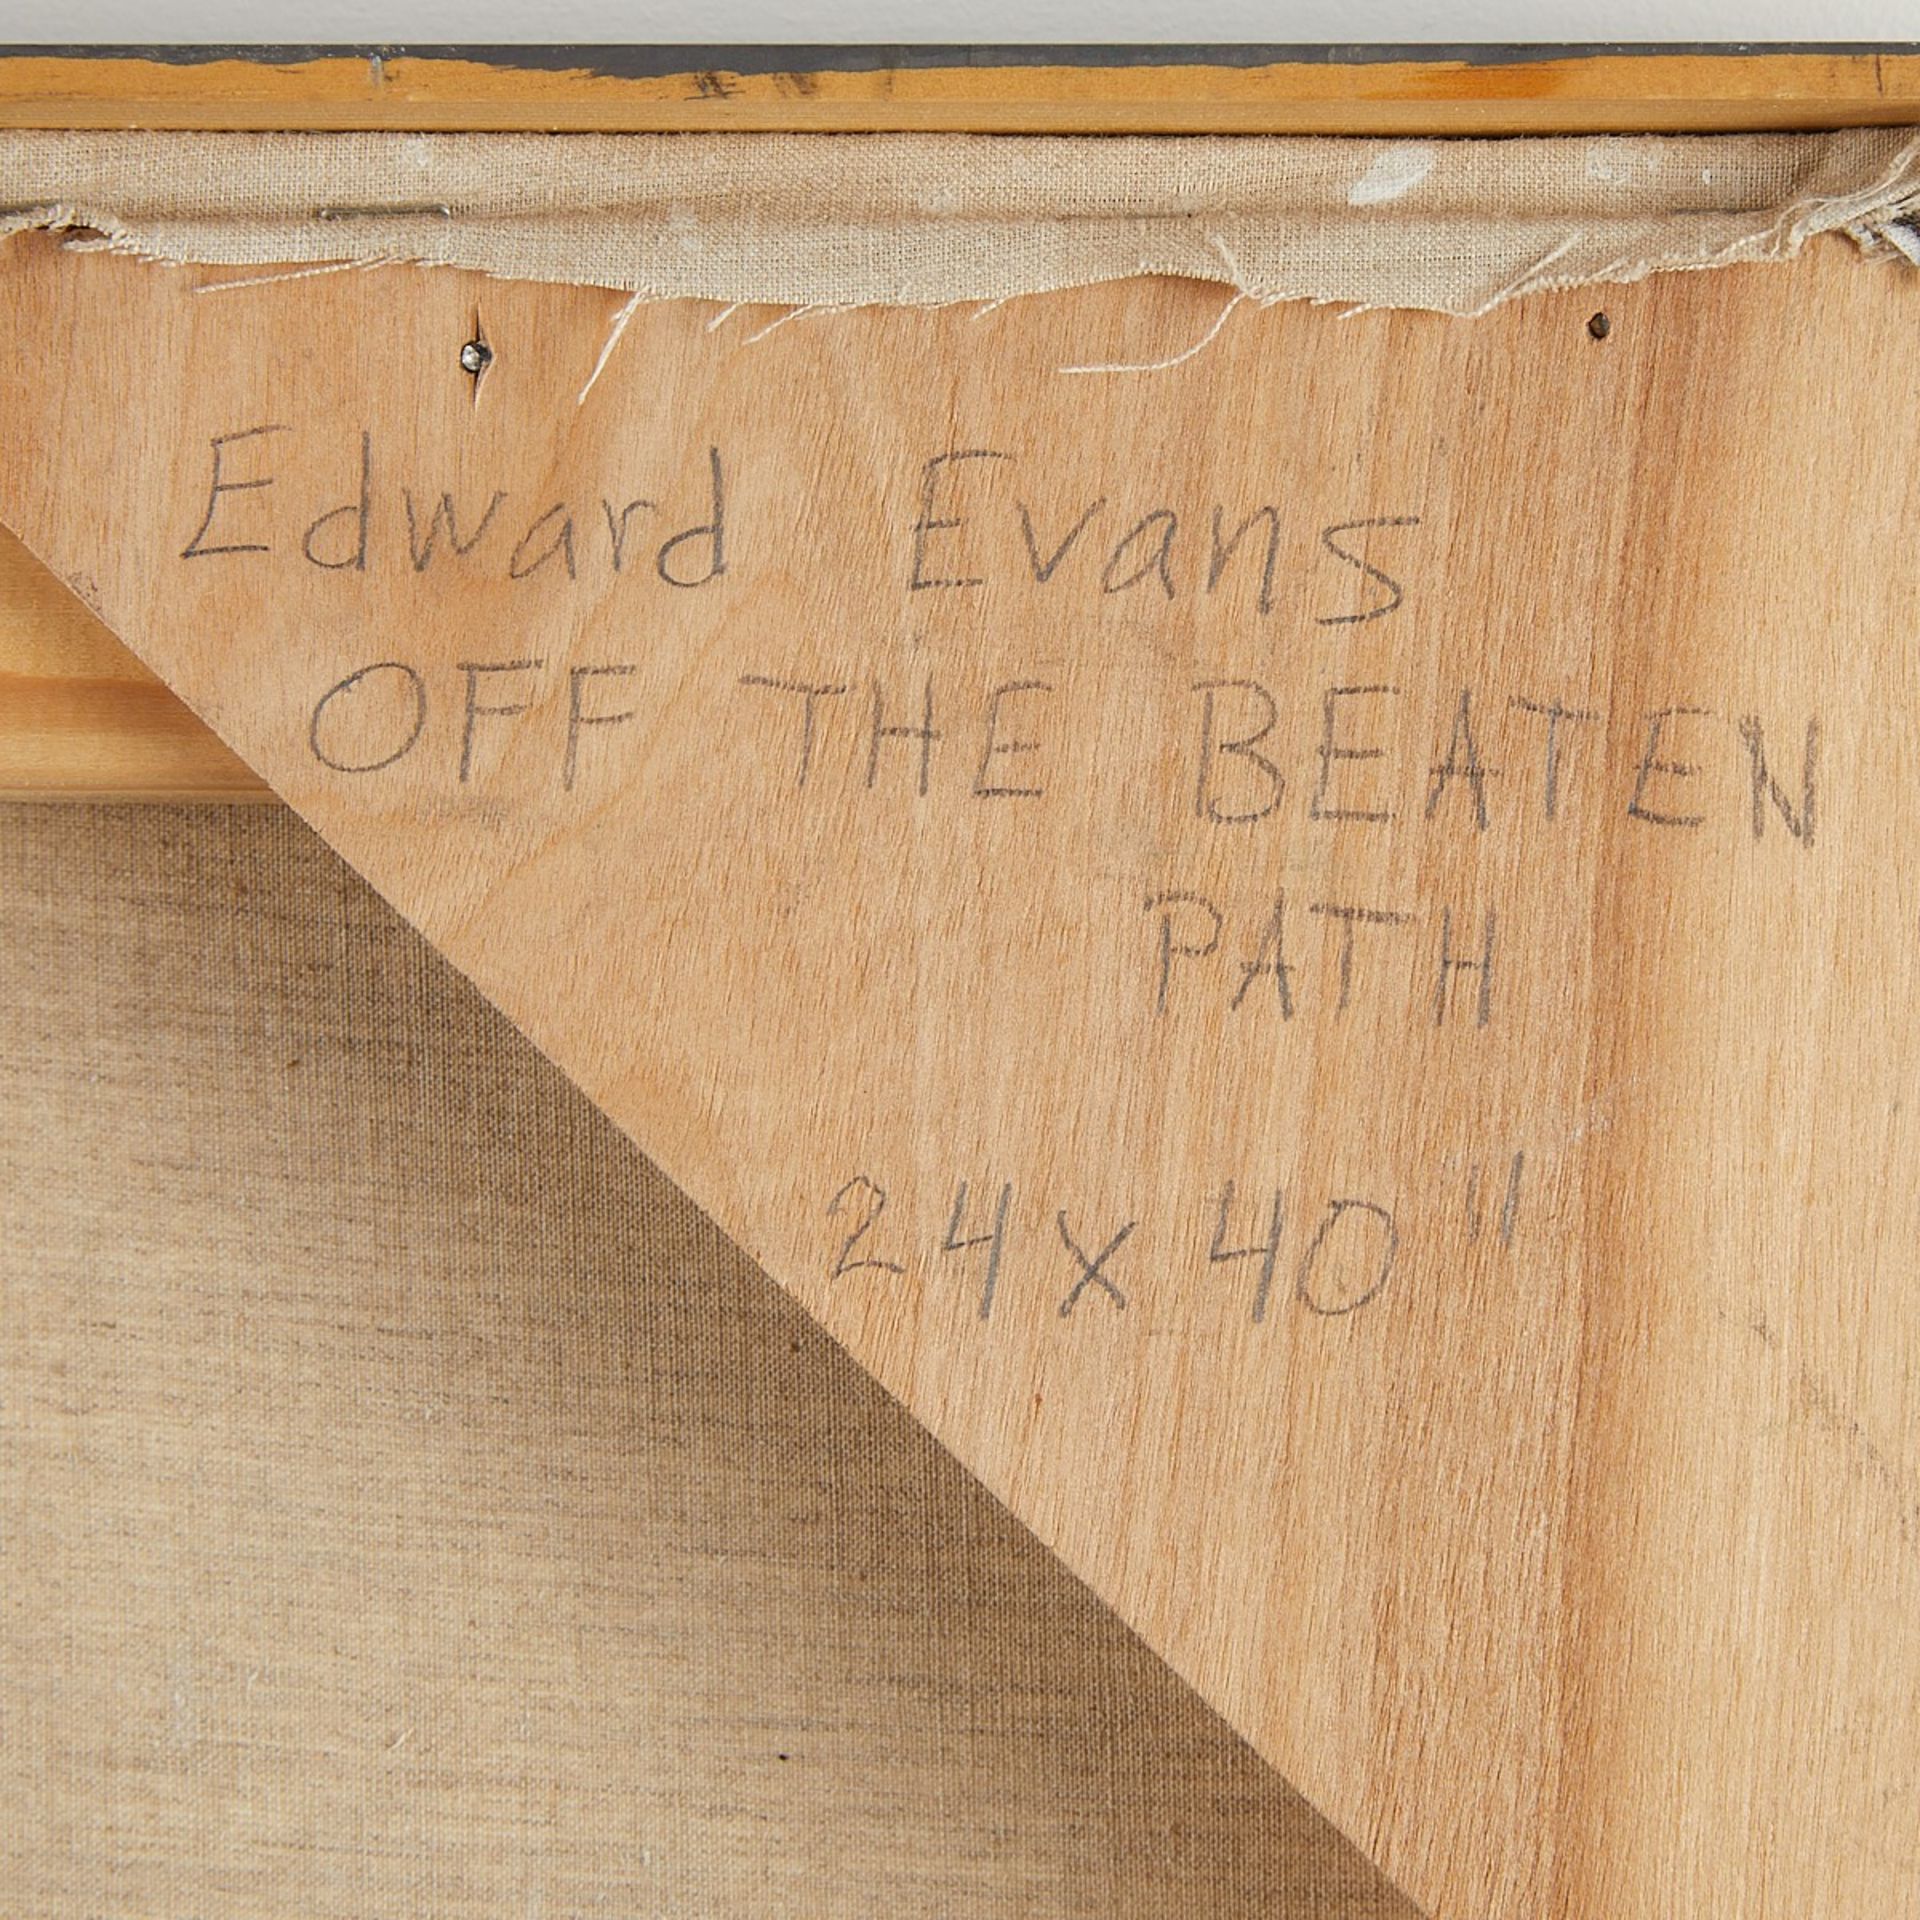 Edward Evans "Off The Beaten Path" Painting - Bild 5 aus 7